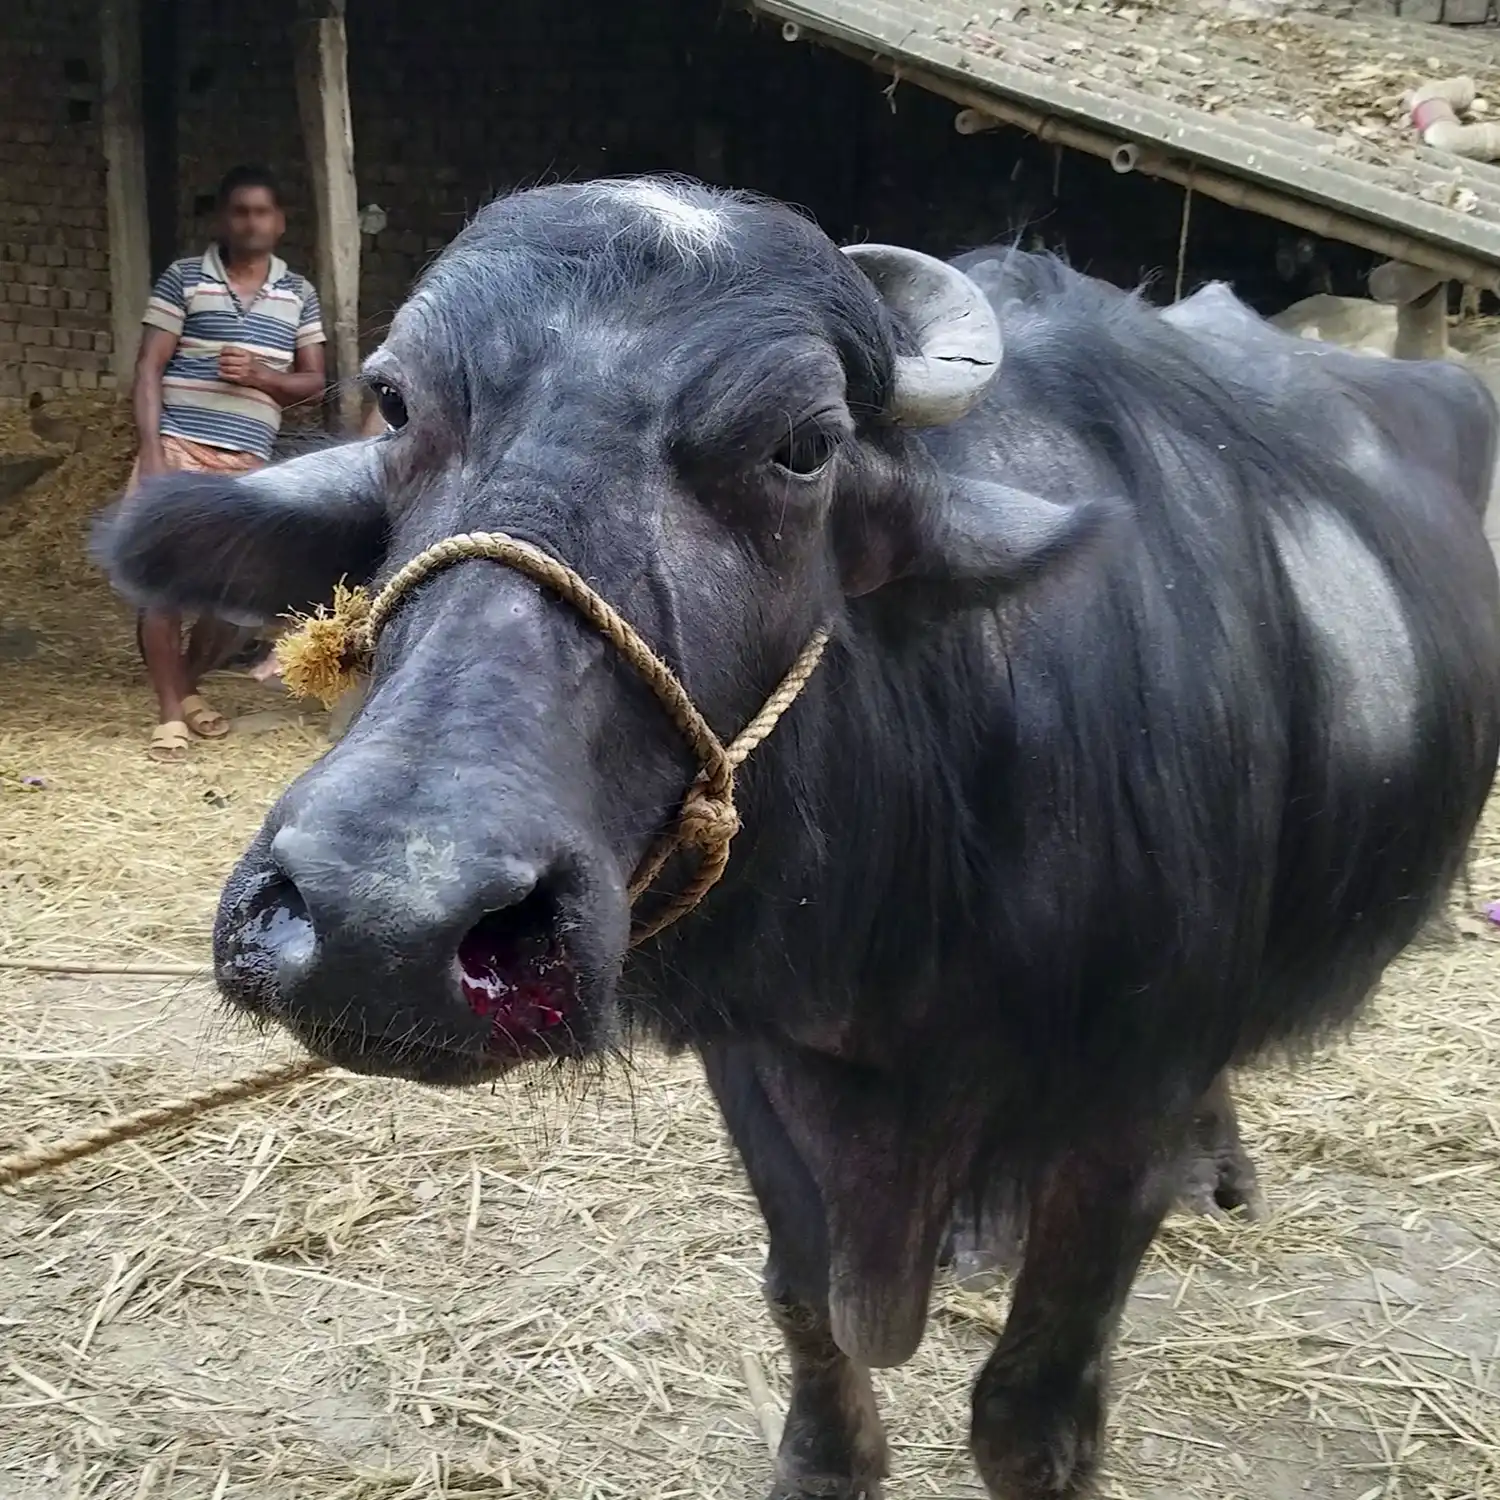 Buffalo in an Indian dairy farm